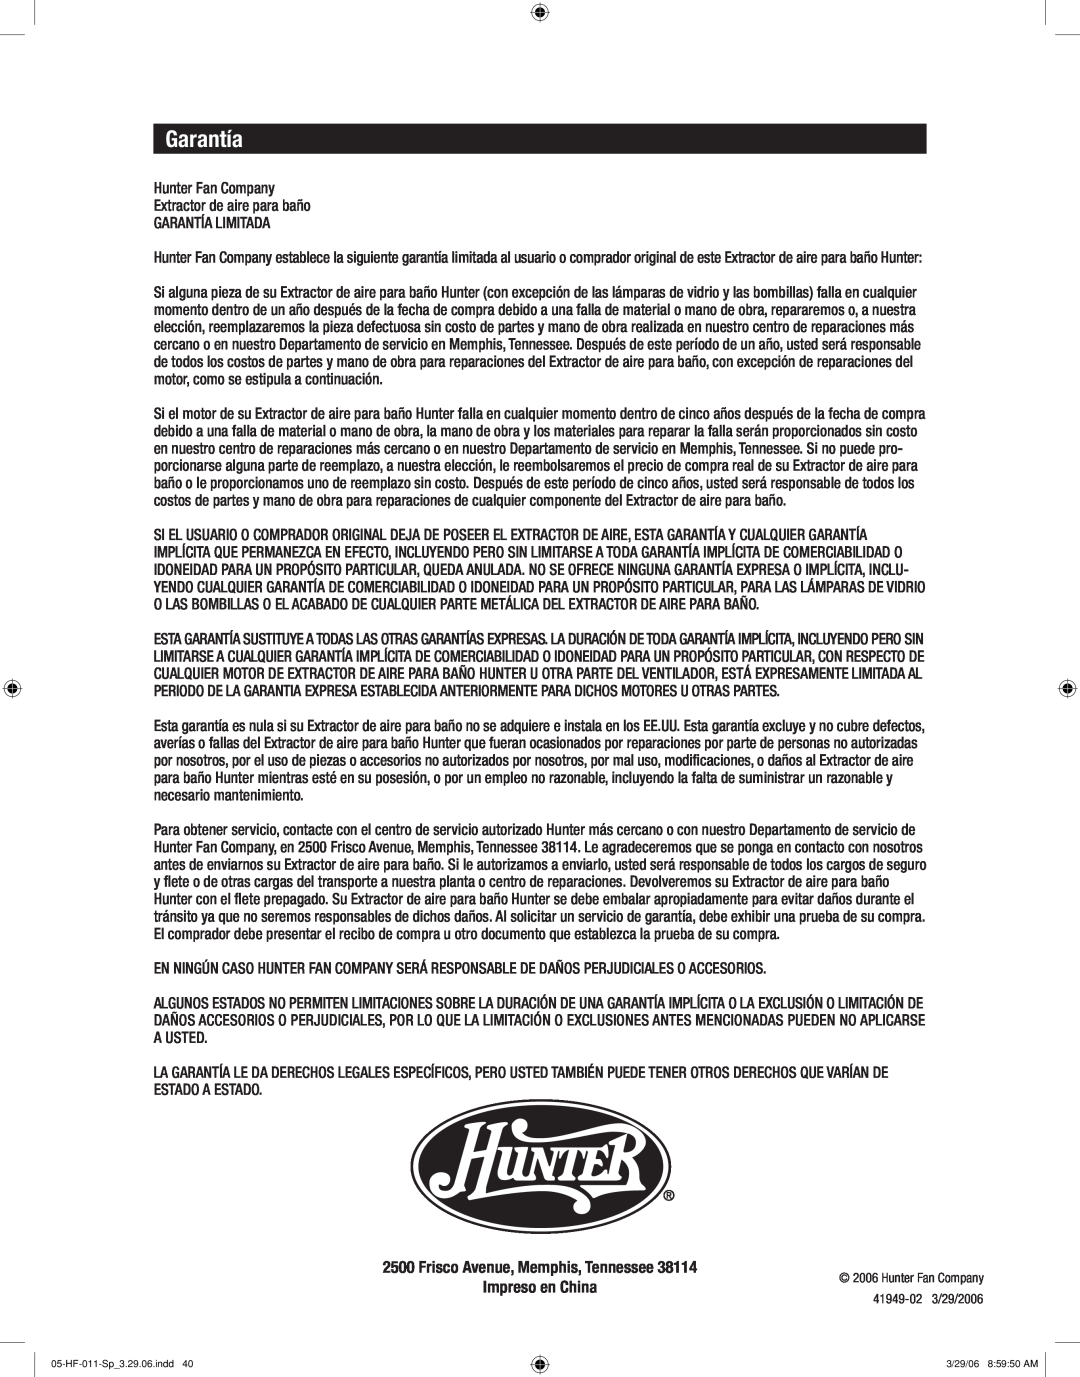 Hunter Fan 83001 manual Garantía, Frisco Avenue, Memphis, Tennessee Impreso en China 